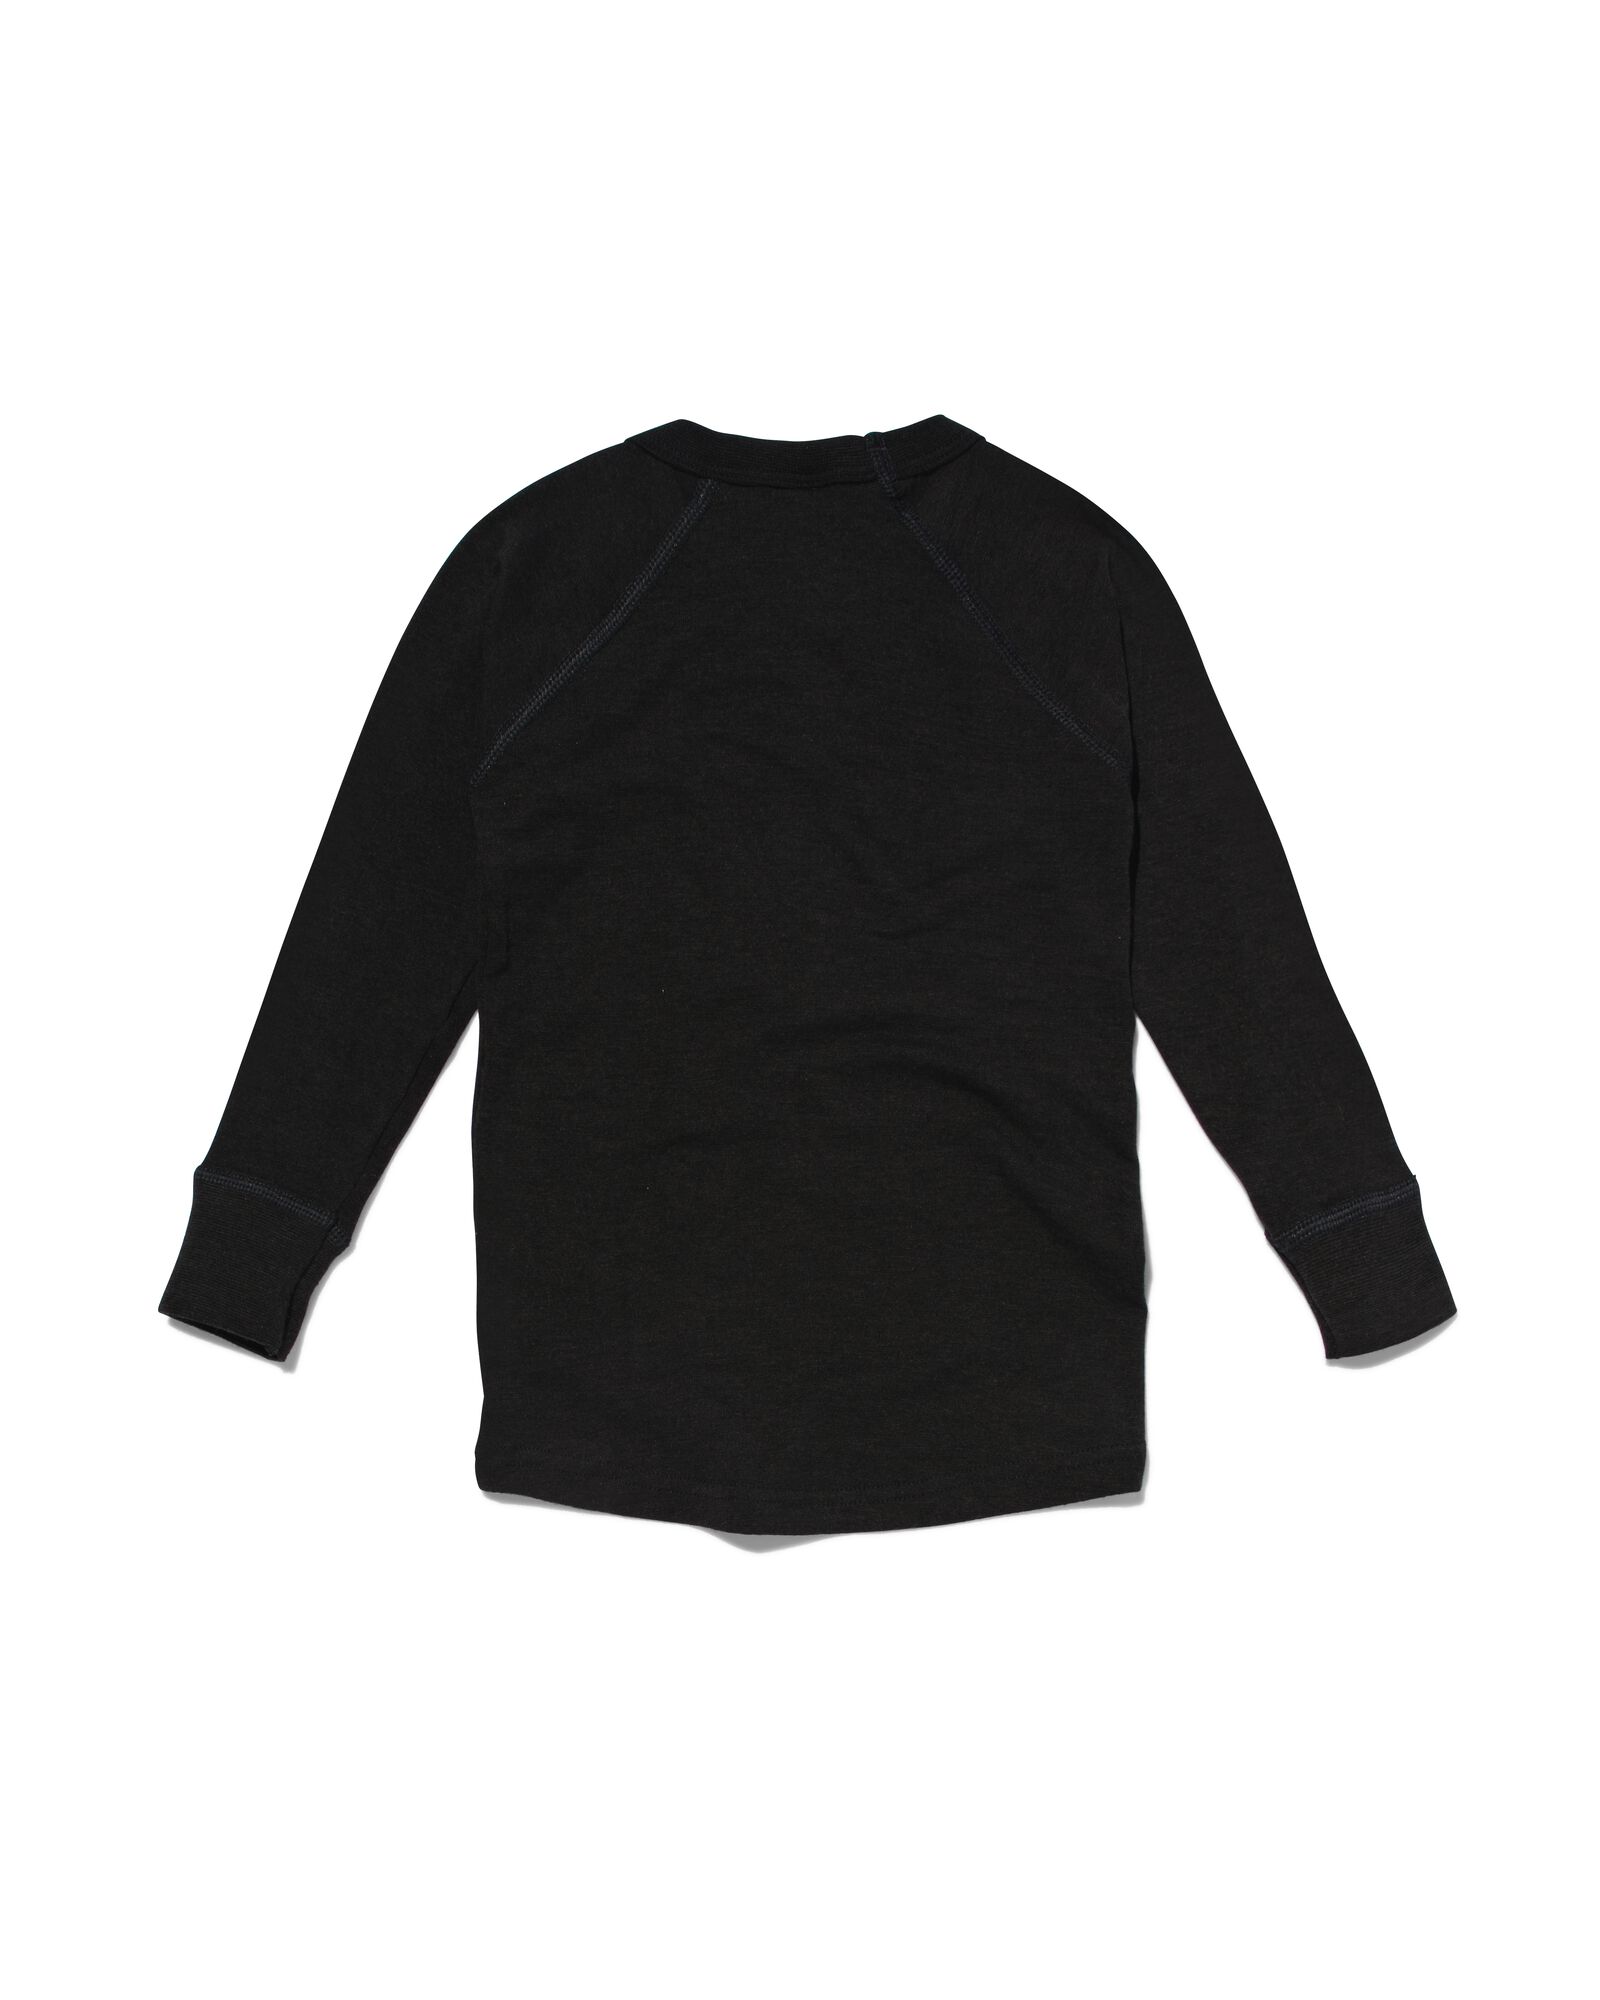 kinder thermo t-shirt zwart 134/140 - 19309214 - HEMA